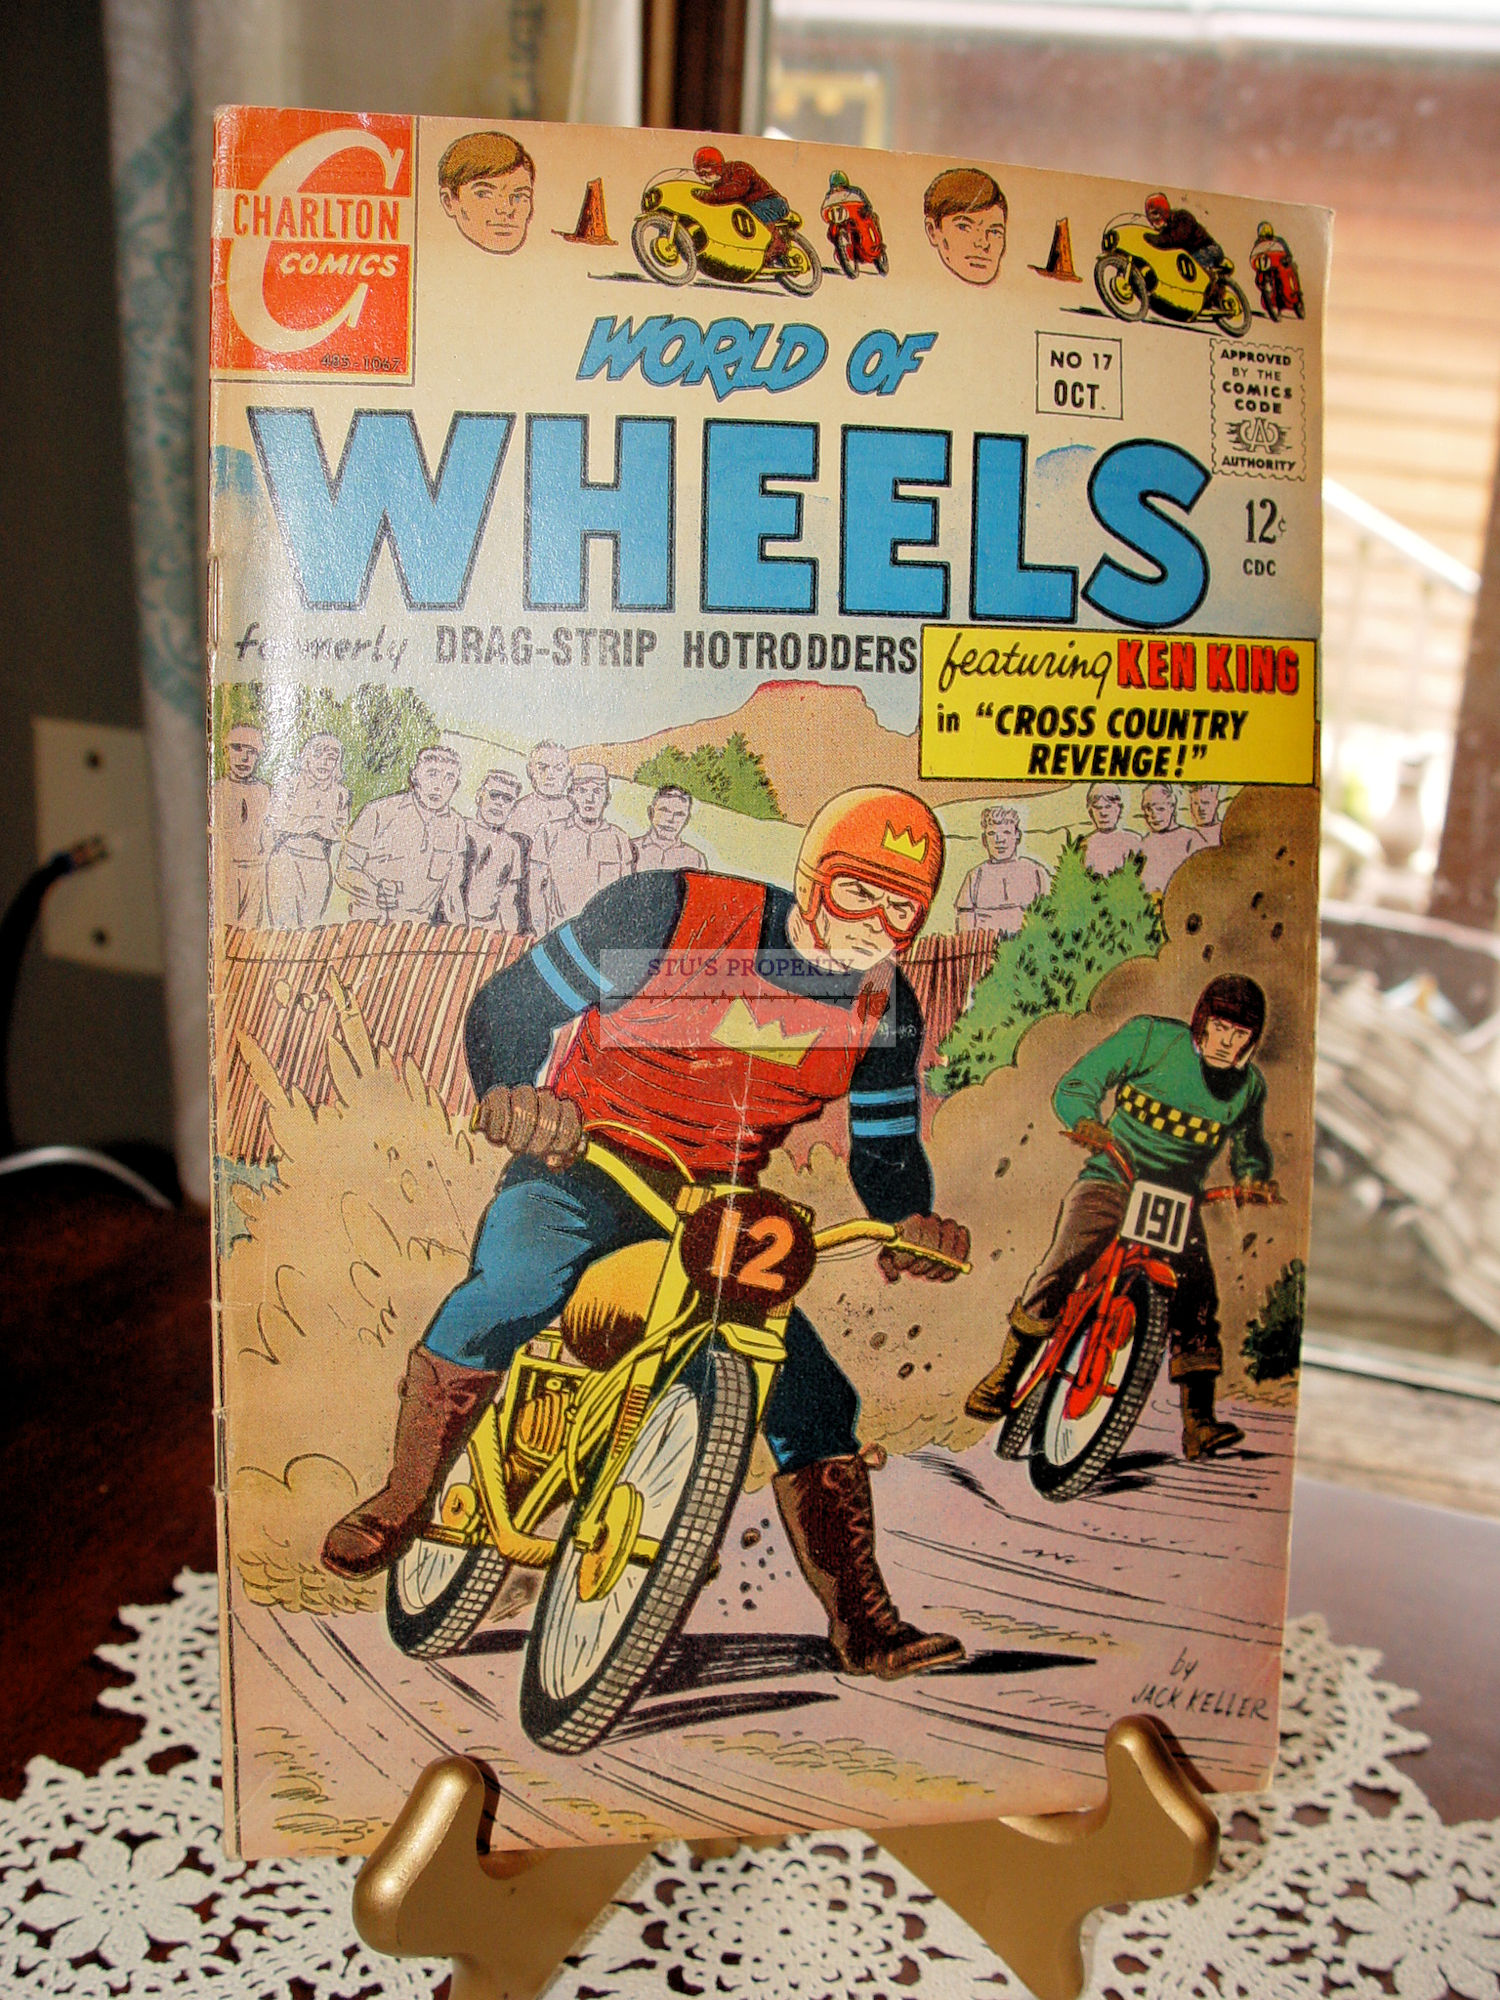 1967 World of Wheels No 17 Ken King;
                        Charlton Comics